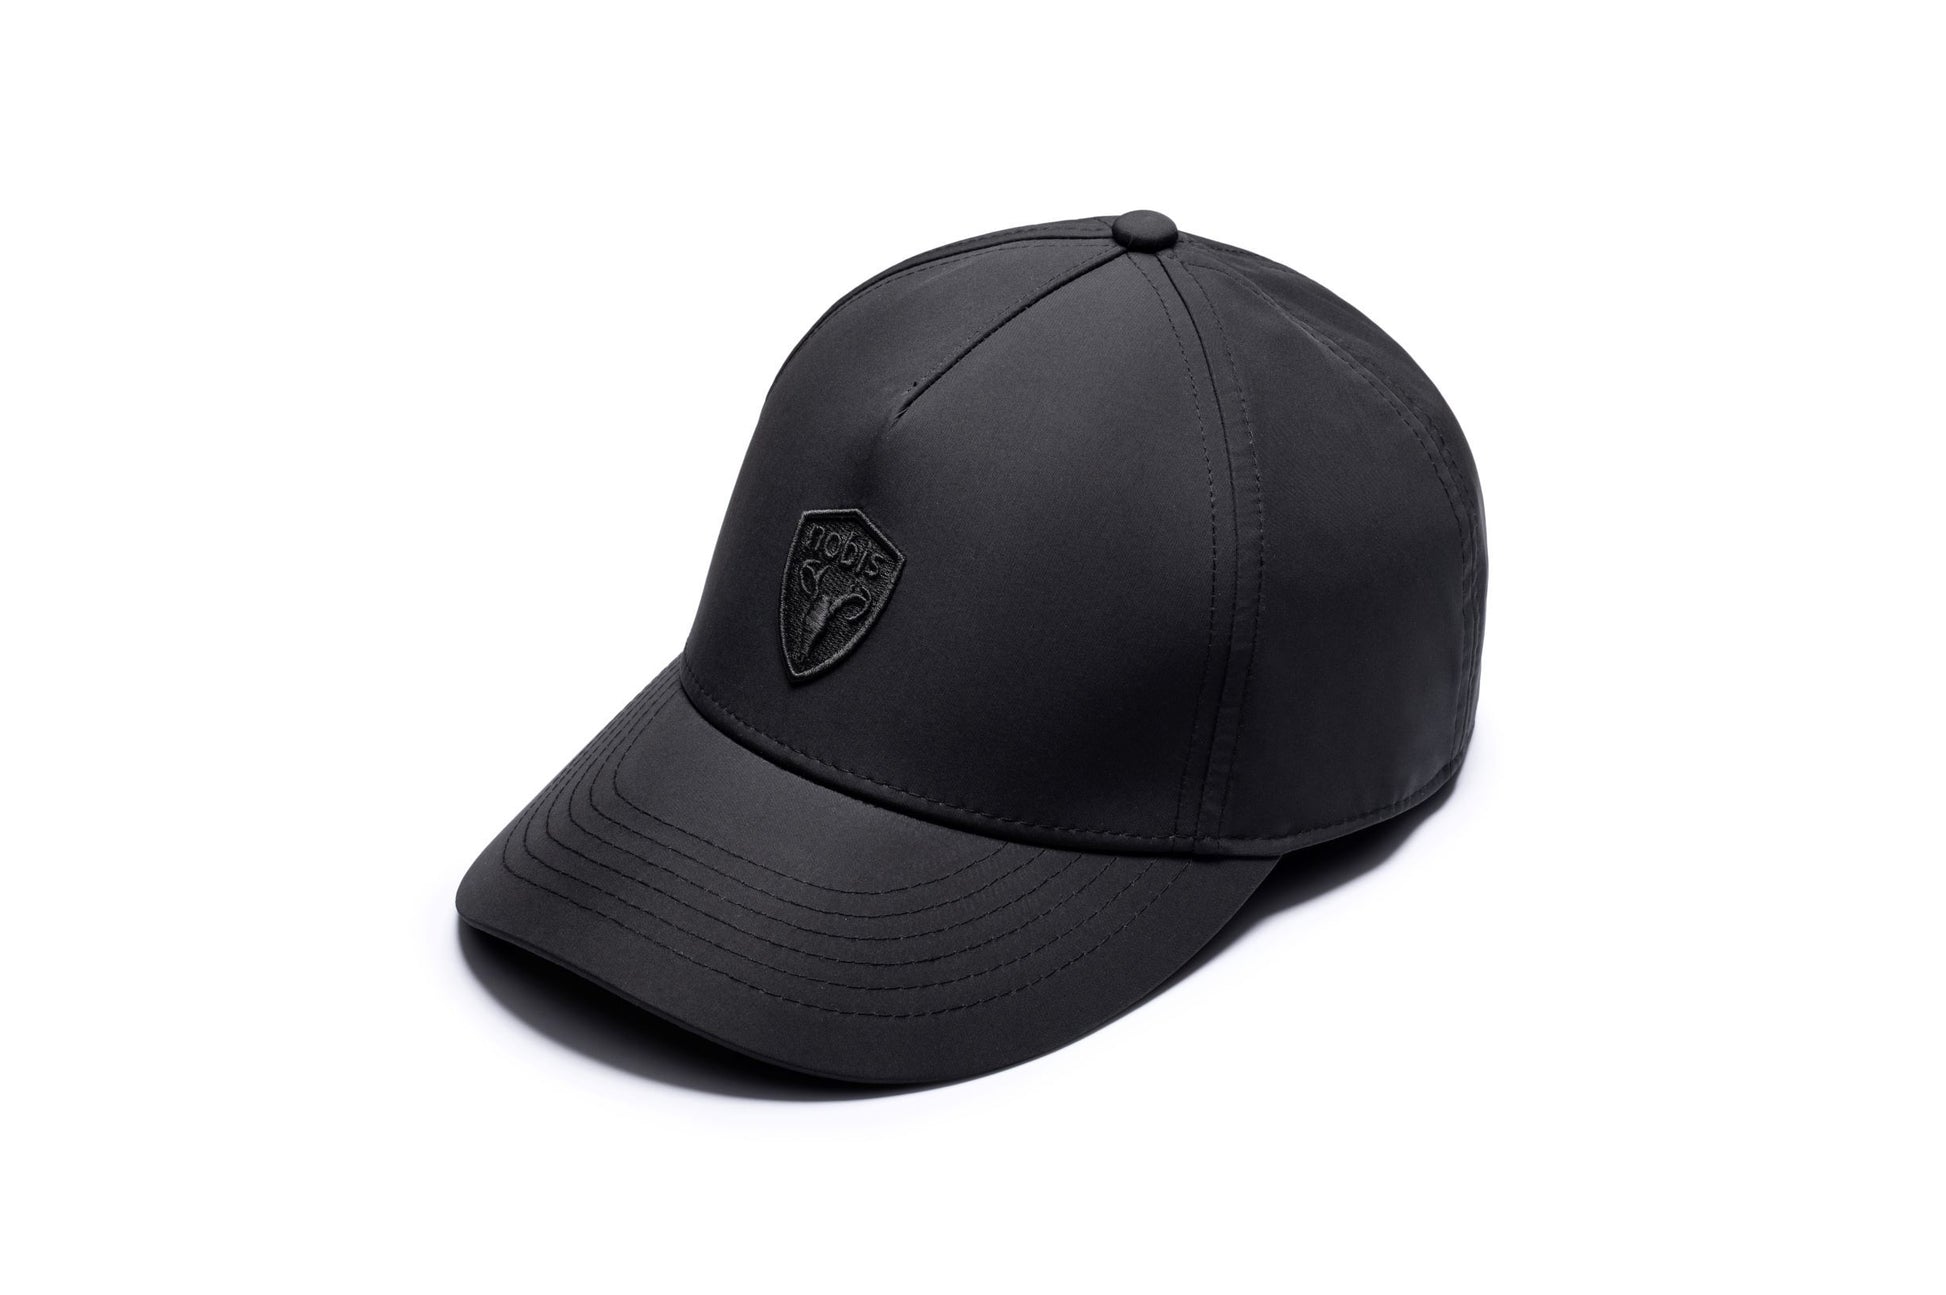 Five panel baseball hat with adjustable back in Black